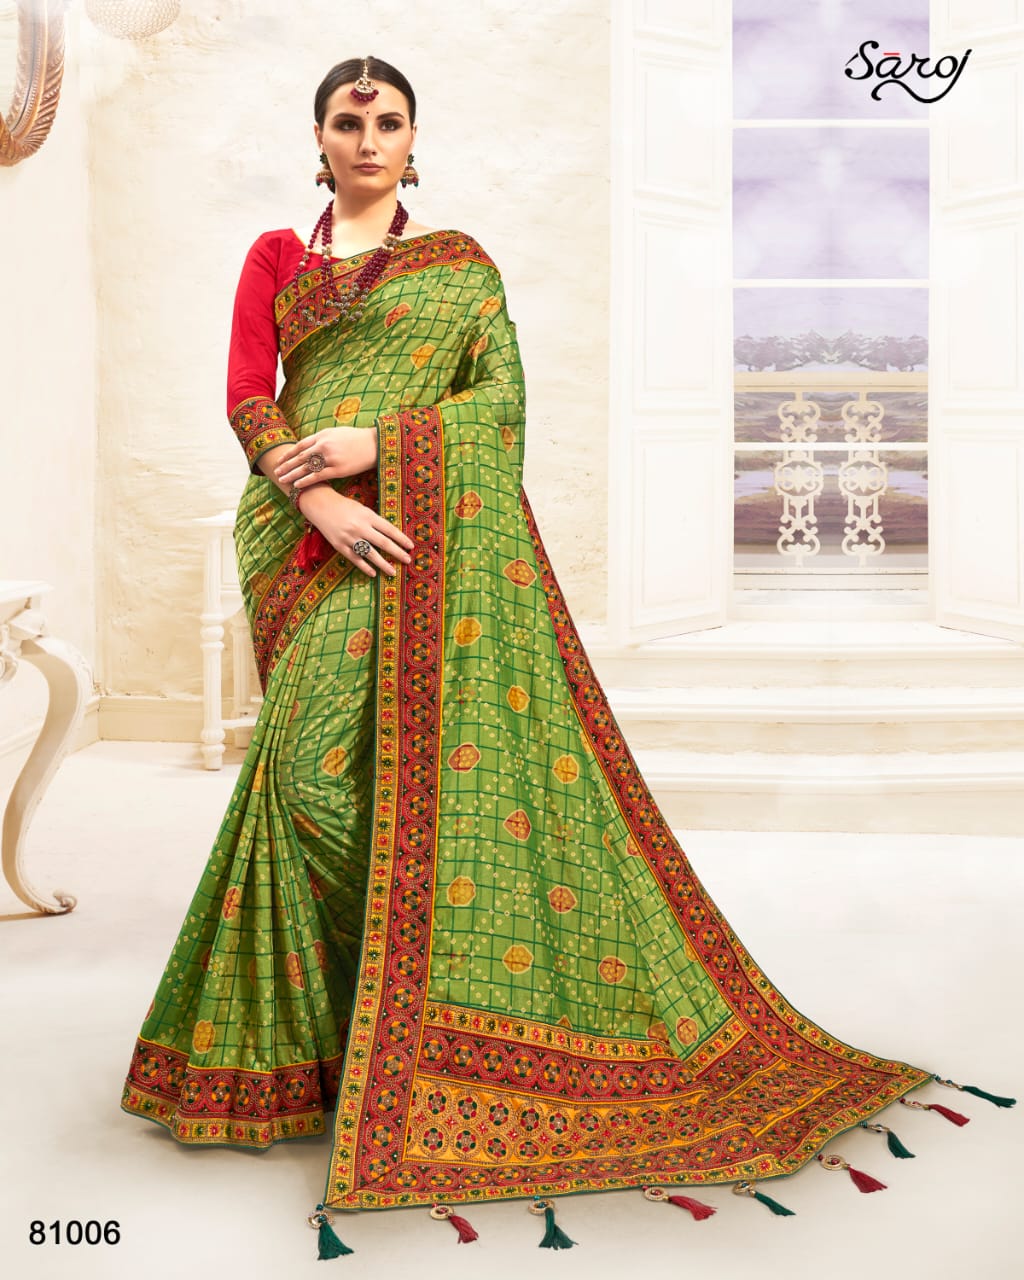 Saroj panihari astonishing style beautifully designed Sarees in factory rates